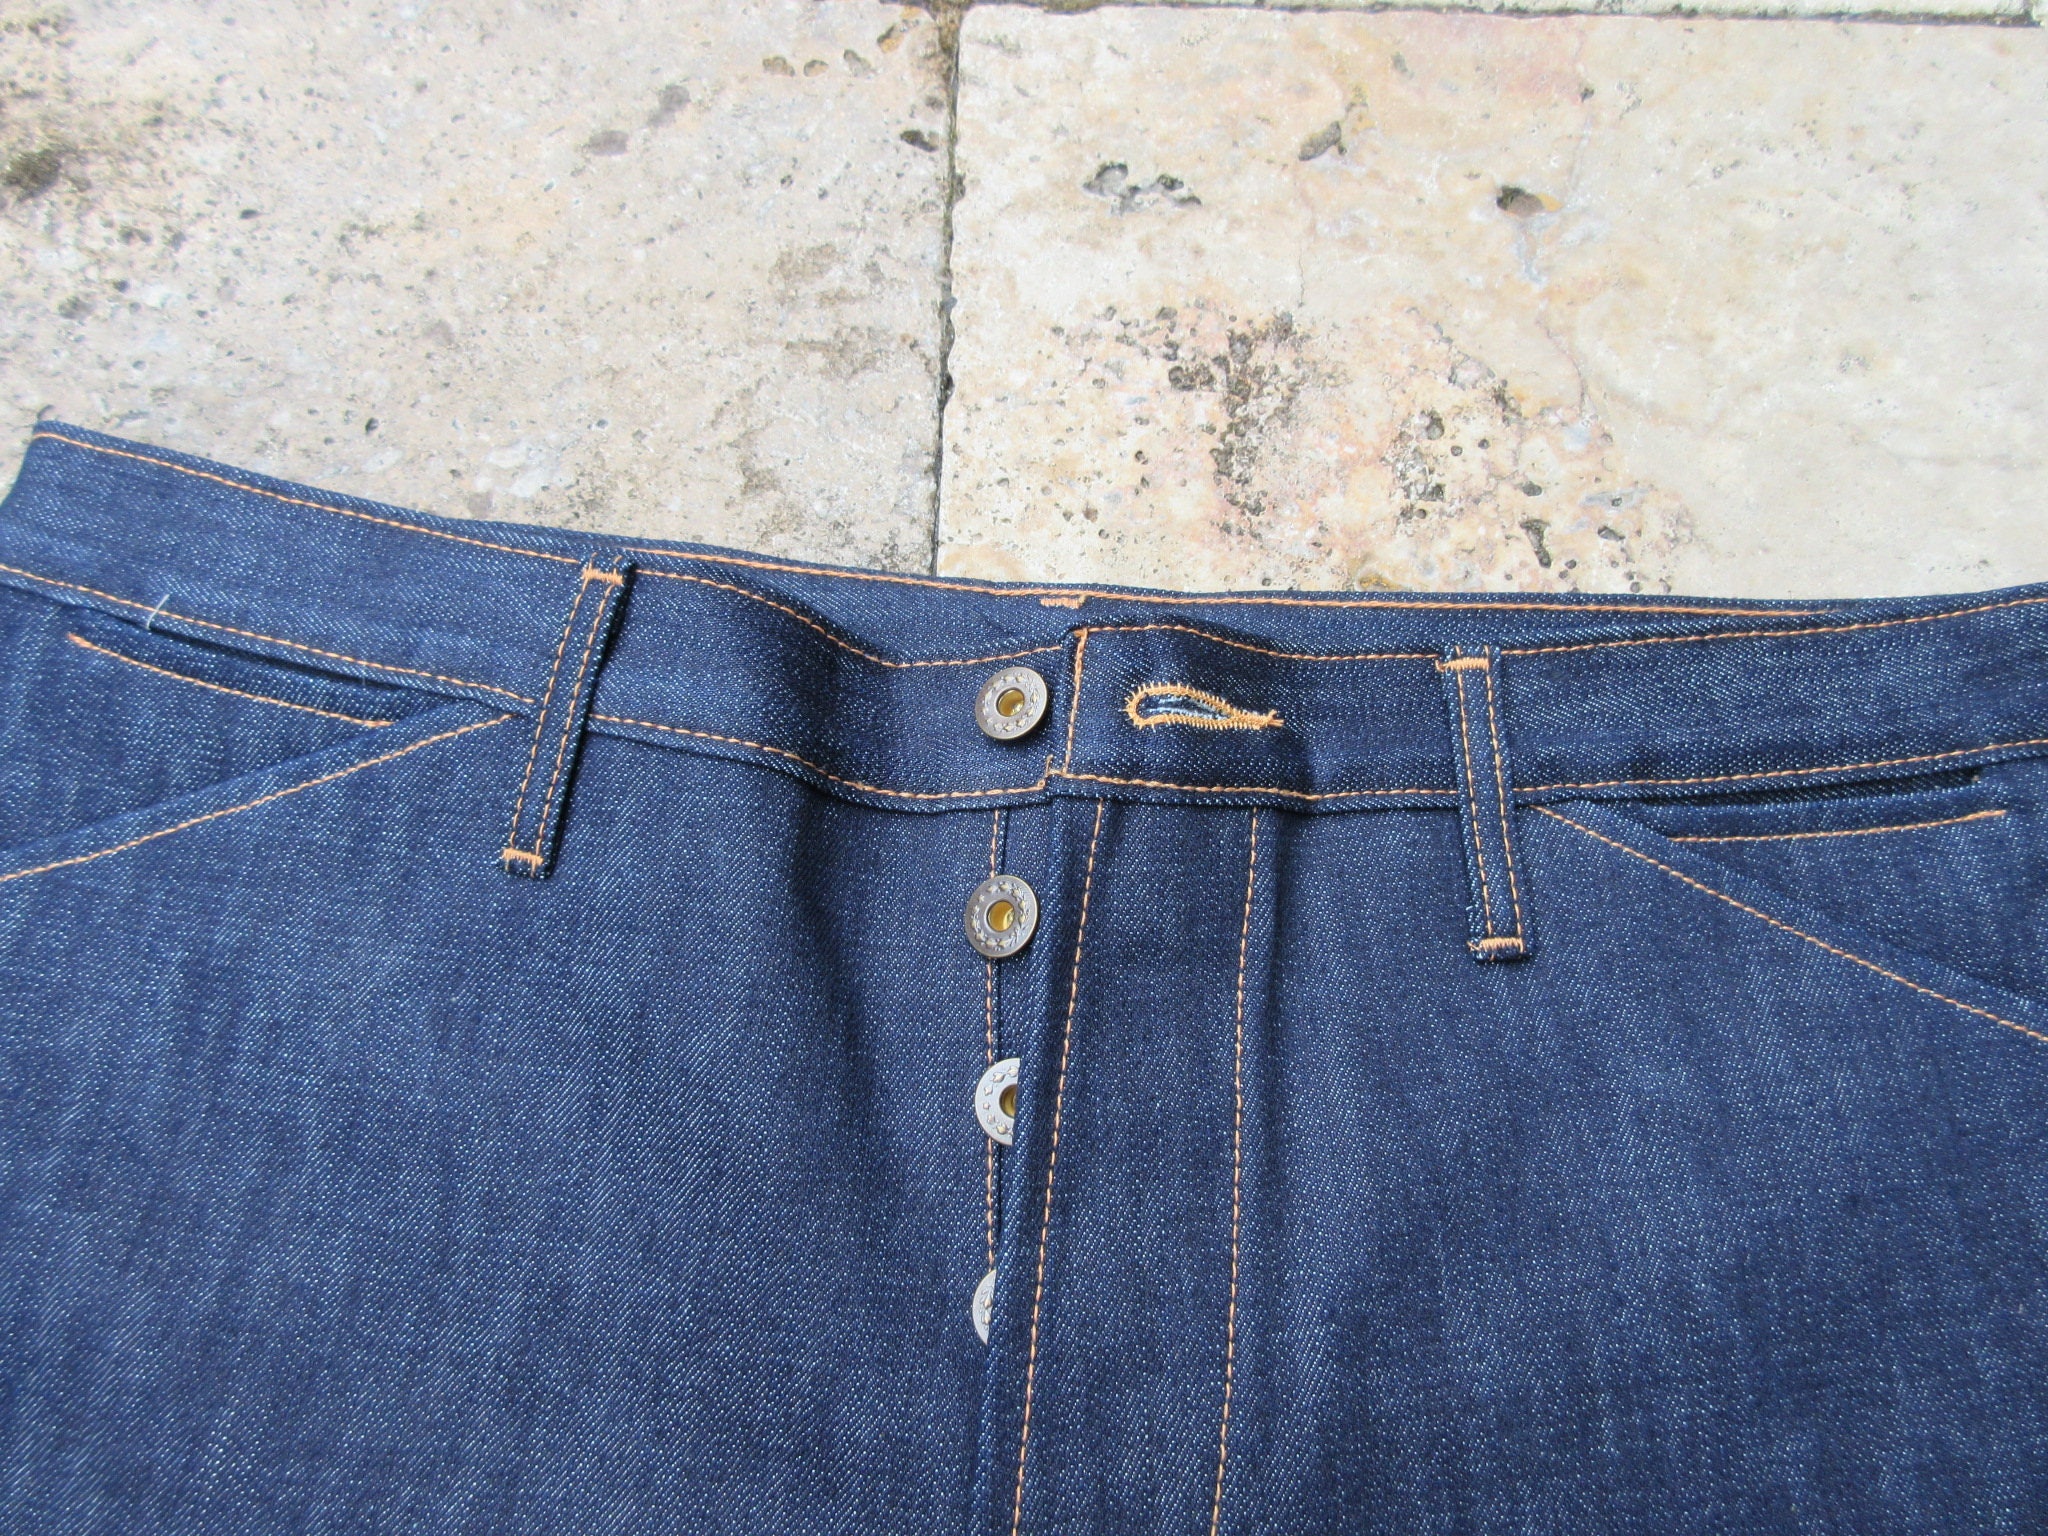 Quartermaster Naval Denim Jeans 30s Style 6-pocket Rockabilly - Etsy